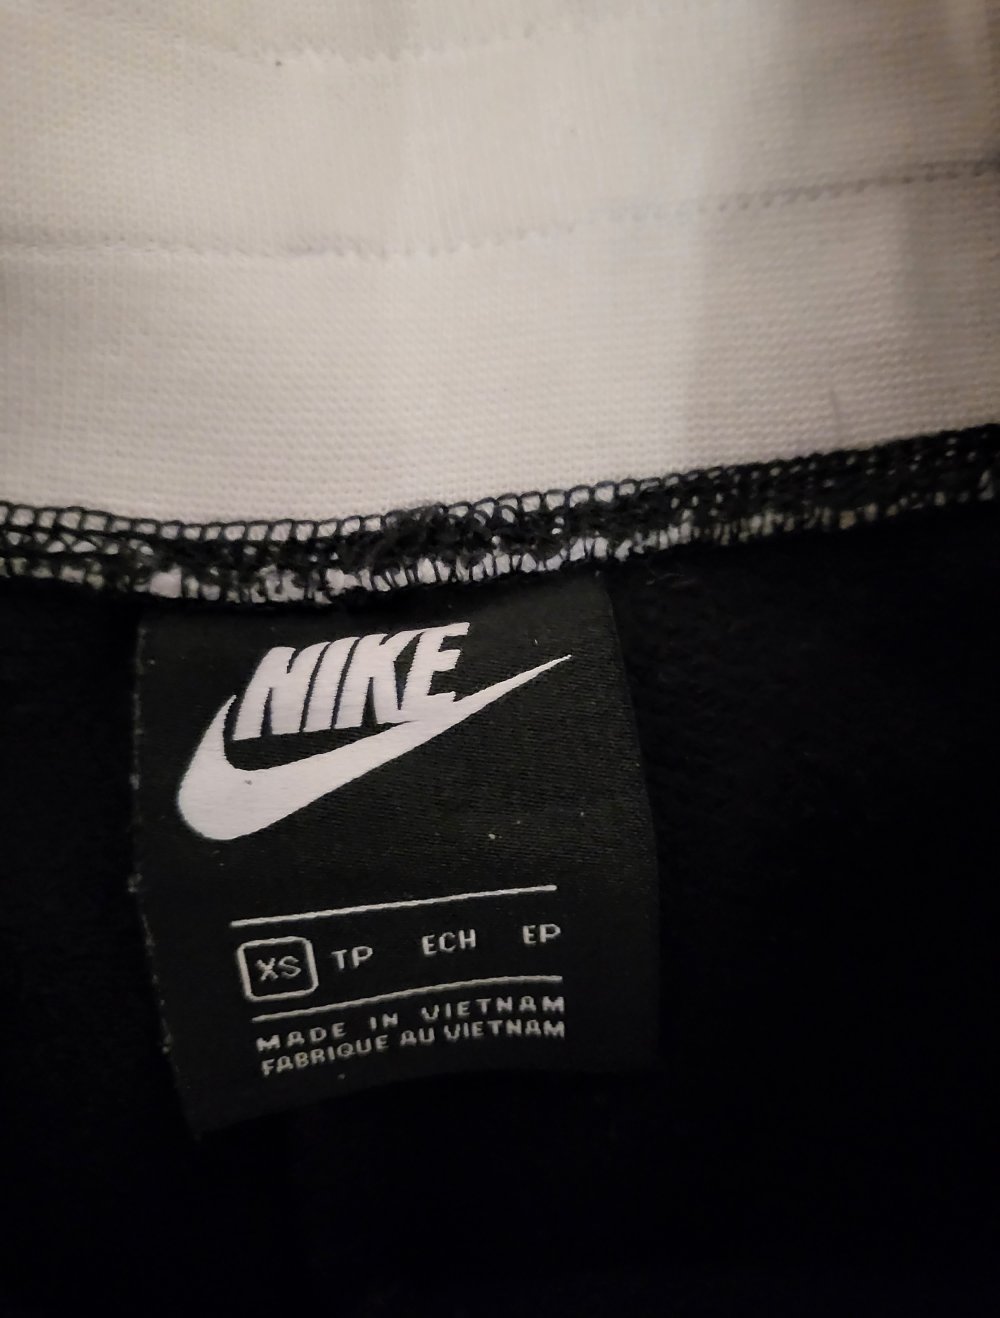 Jogginghose von Nike air Gr XS schwarz weiß grau